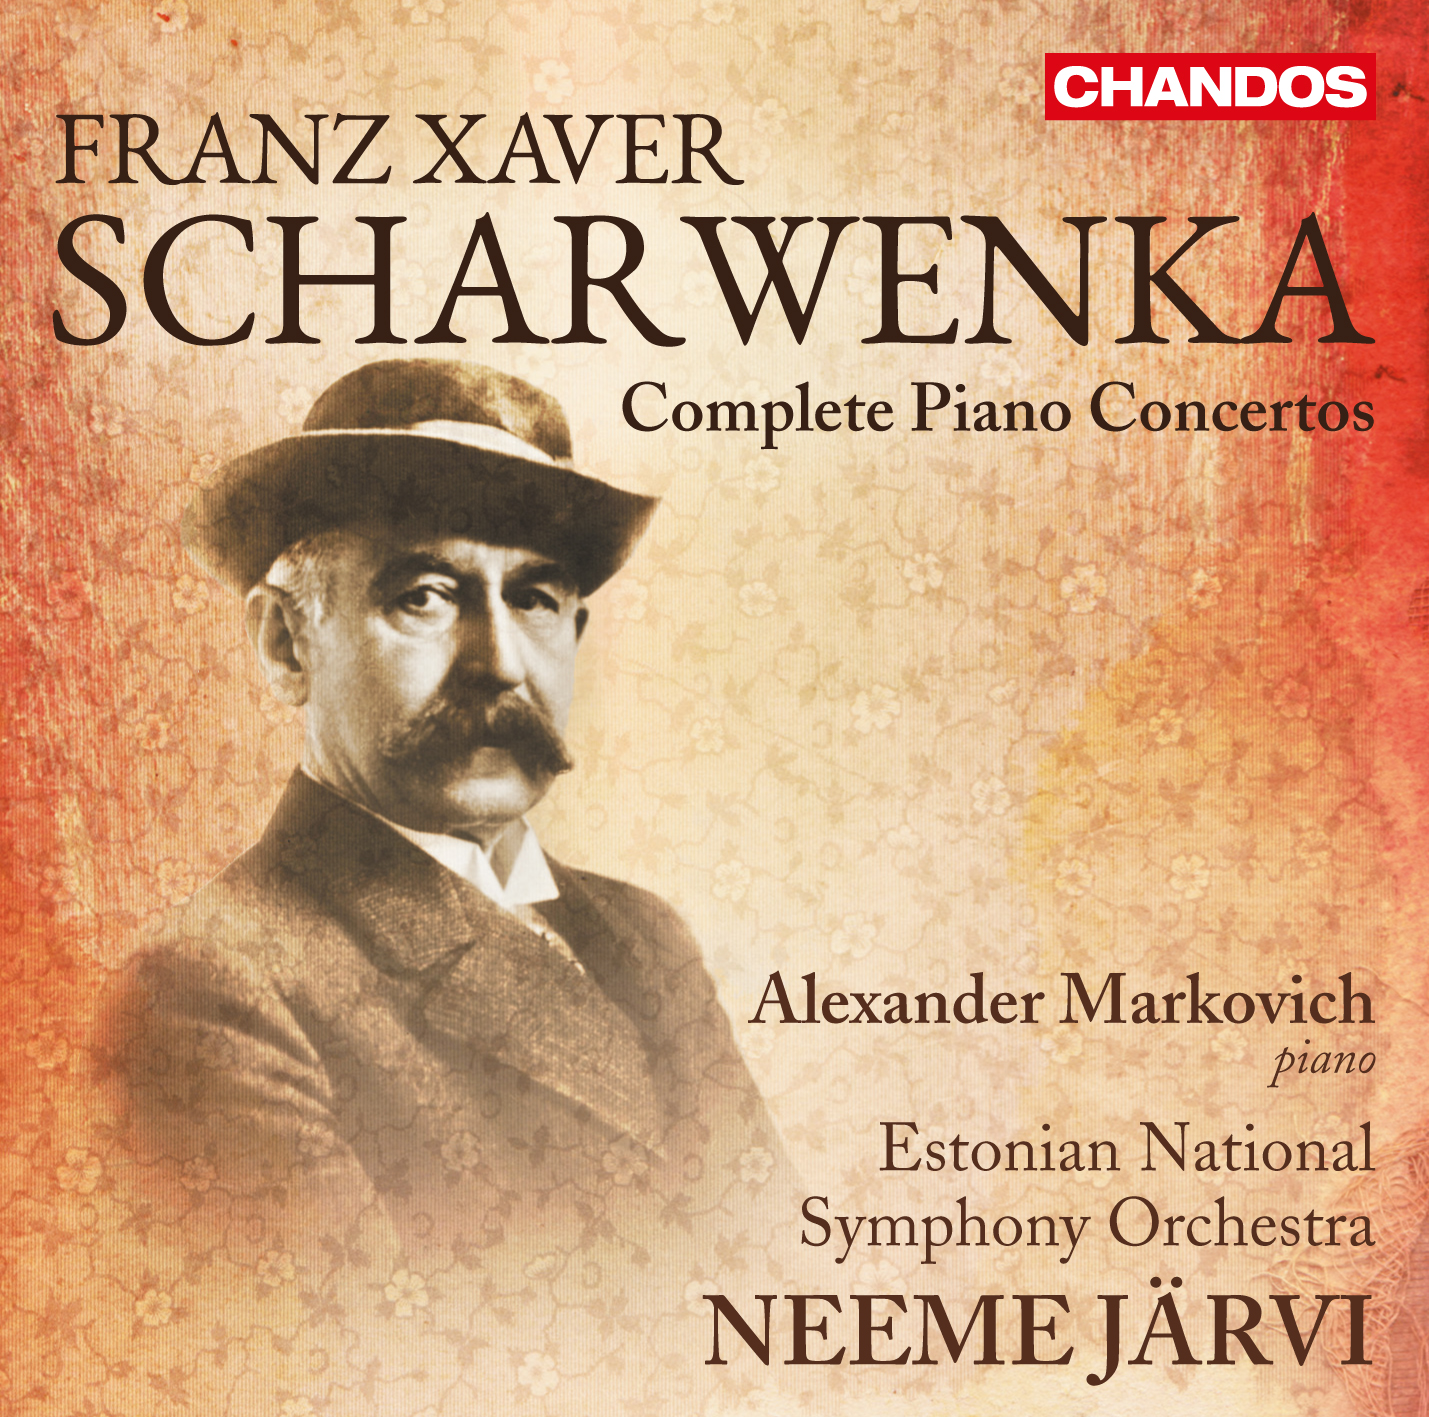 FRANZ XAVER SCHARWENKA – Piano Concertos. Alexander Markovich, Neeme Järvi. Chandos 2014